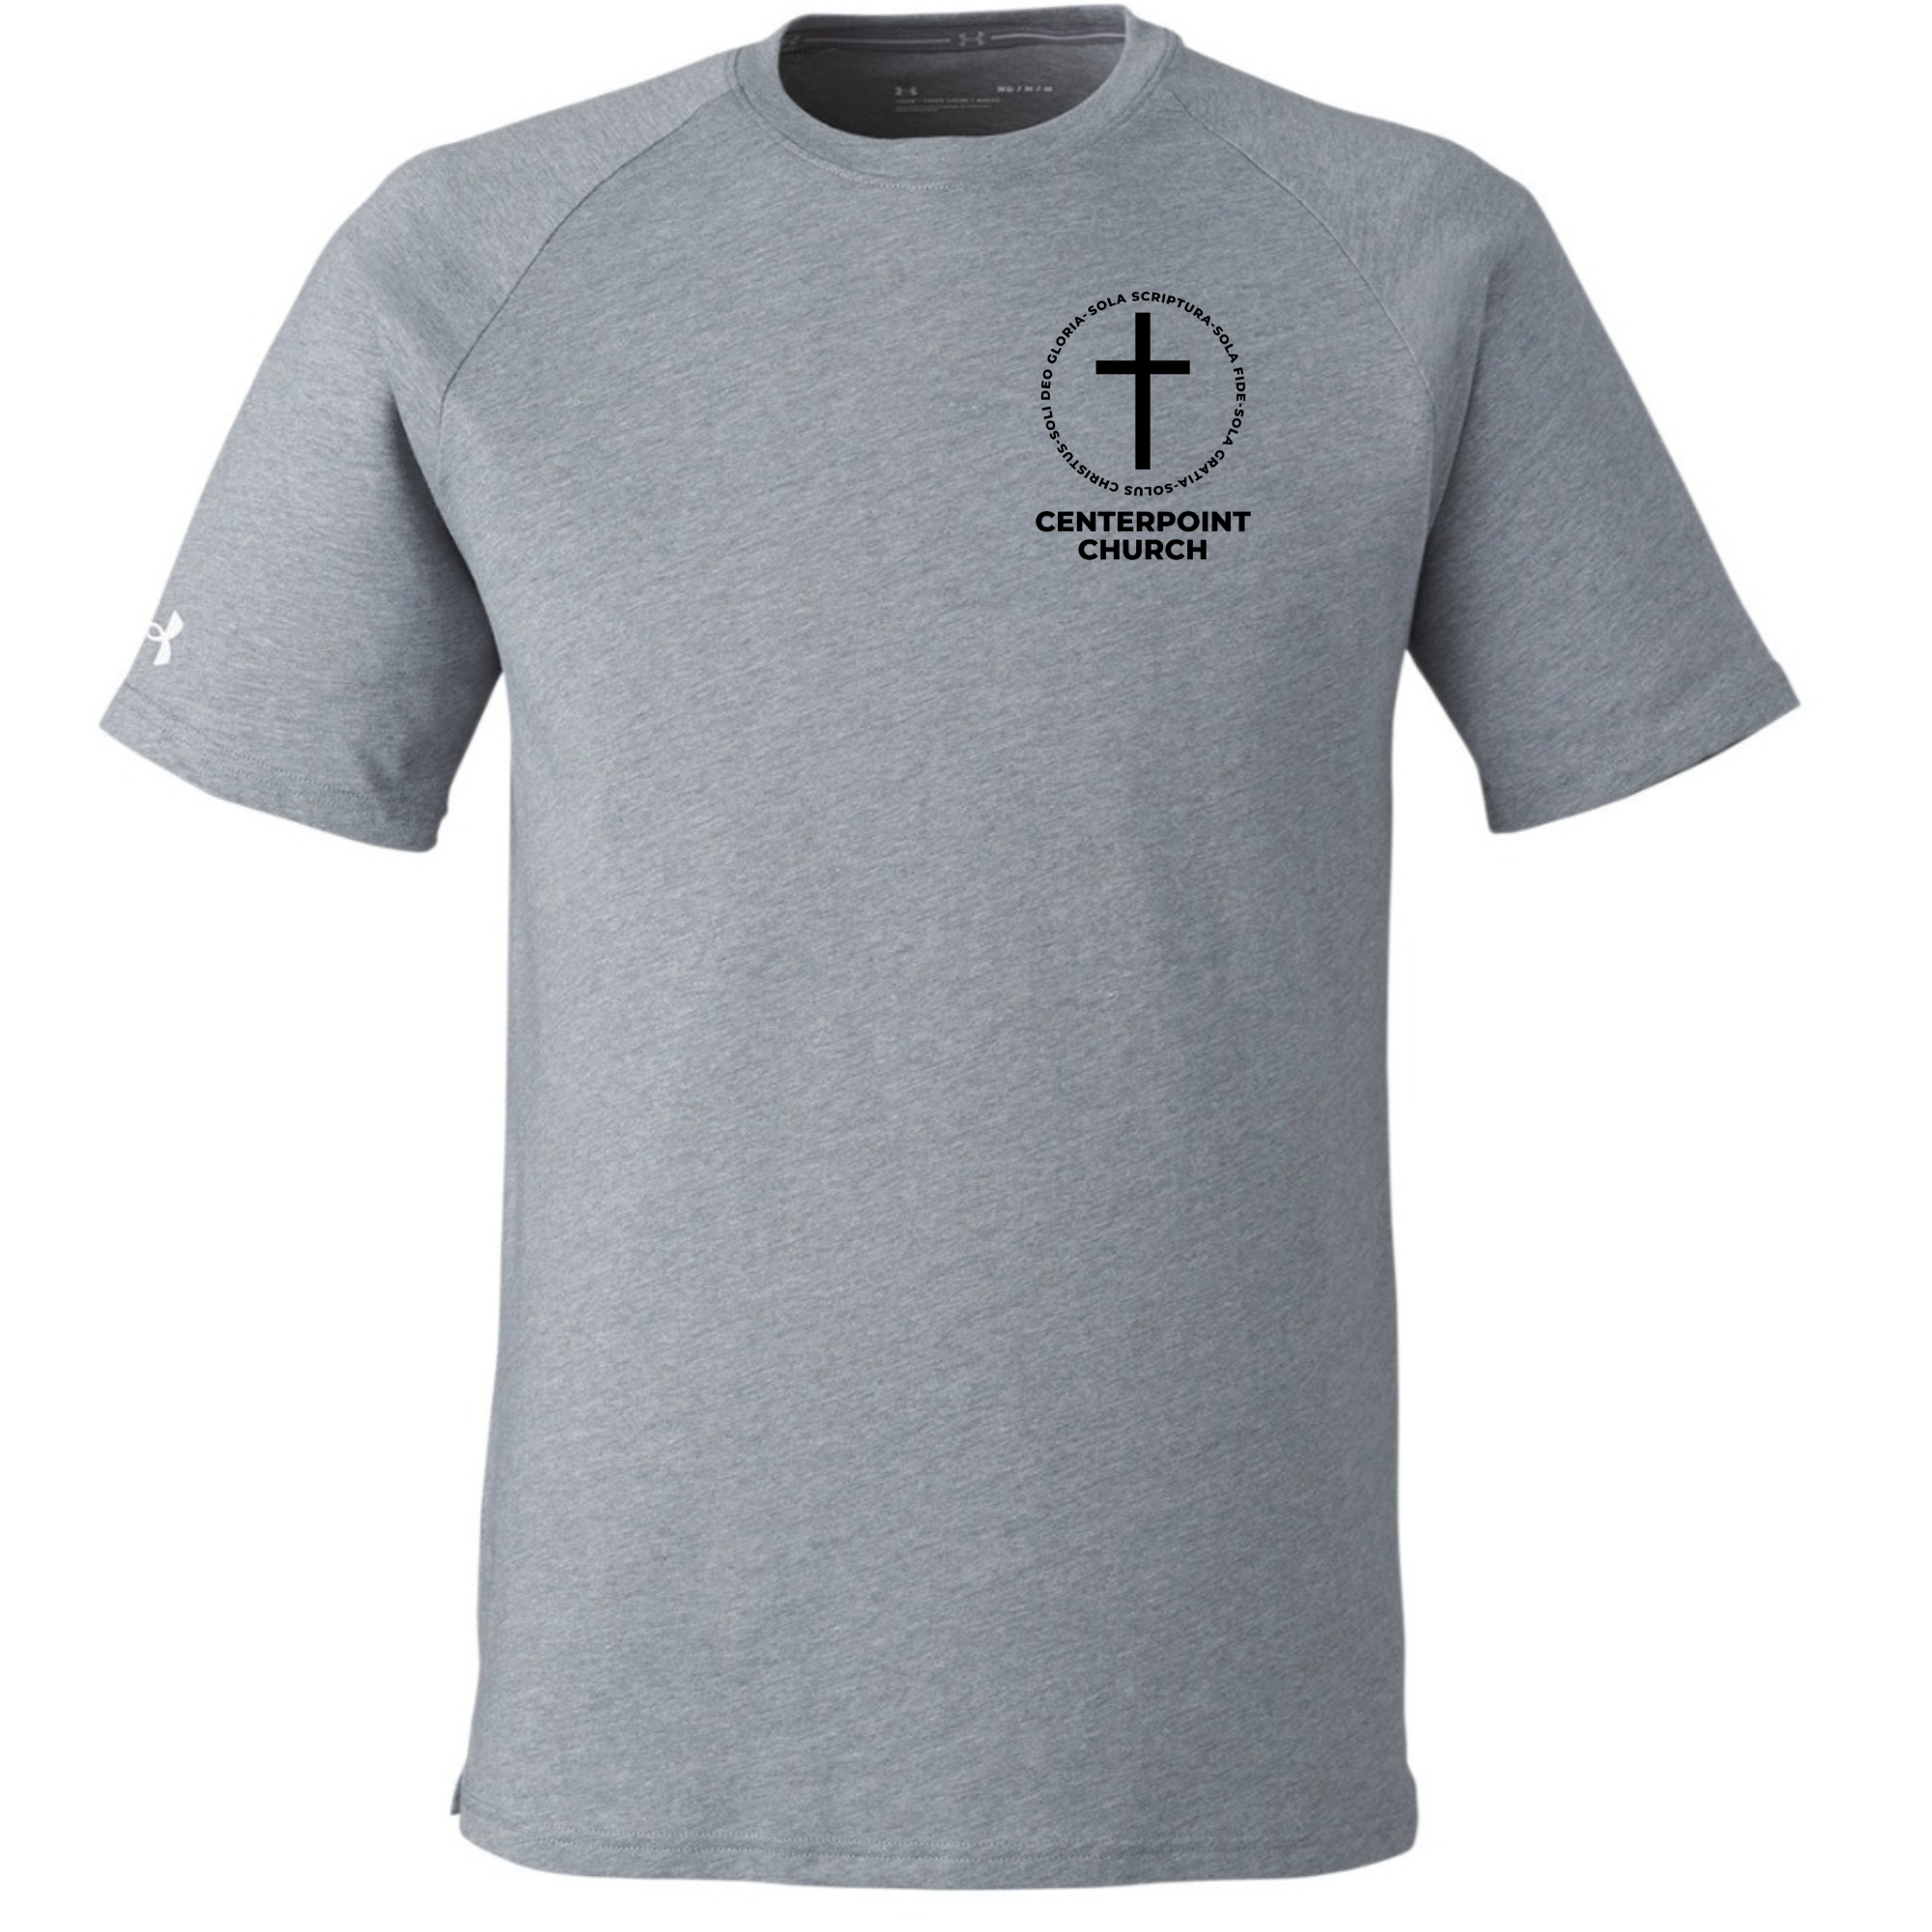 UA Centerpoint Church Performance T-shirt